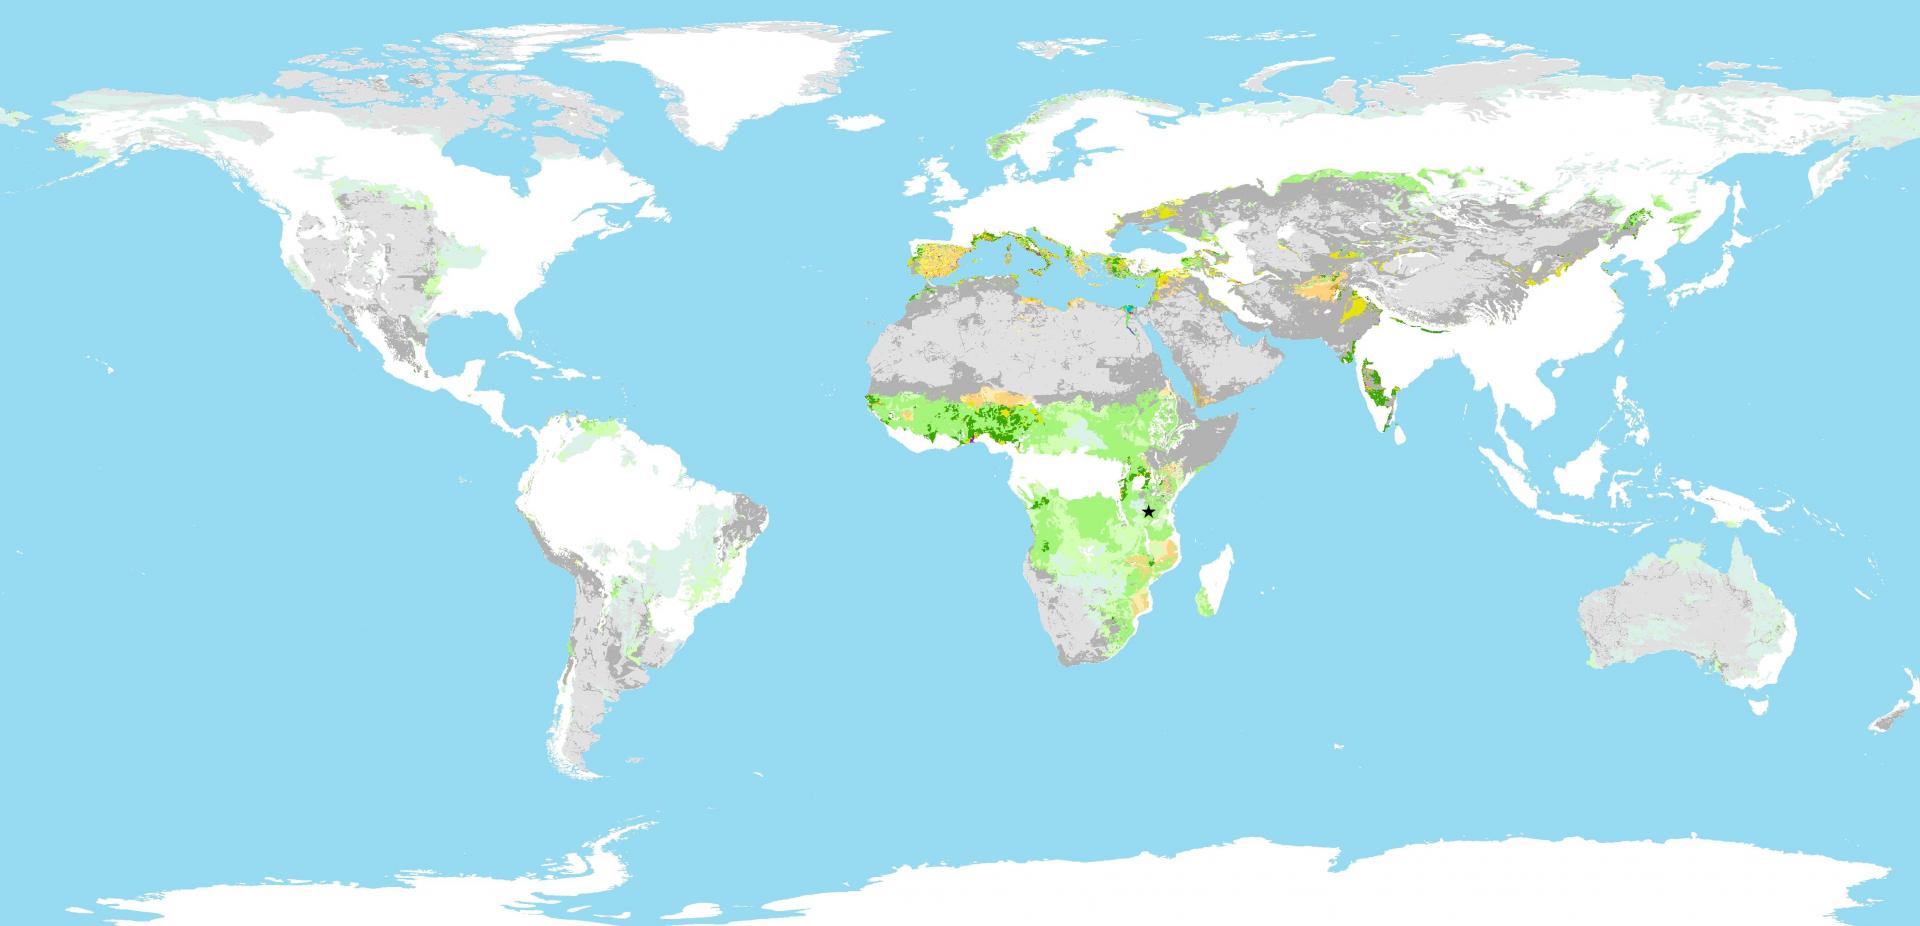 Changes in anthropogenic biomes found in rangelands globally between ...